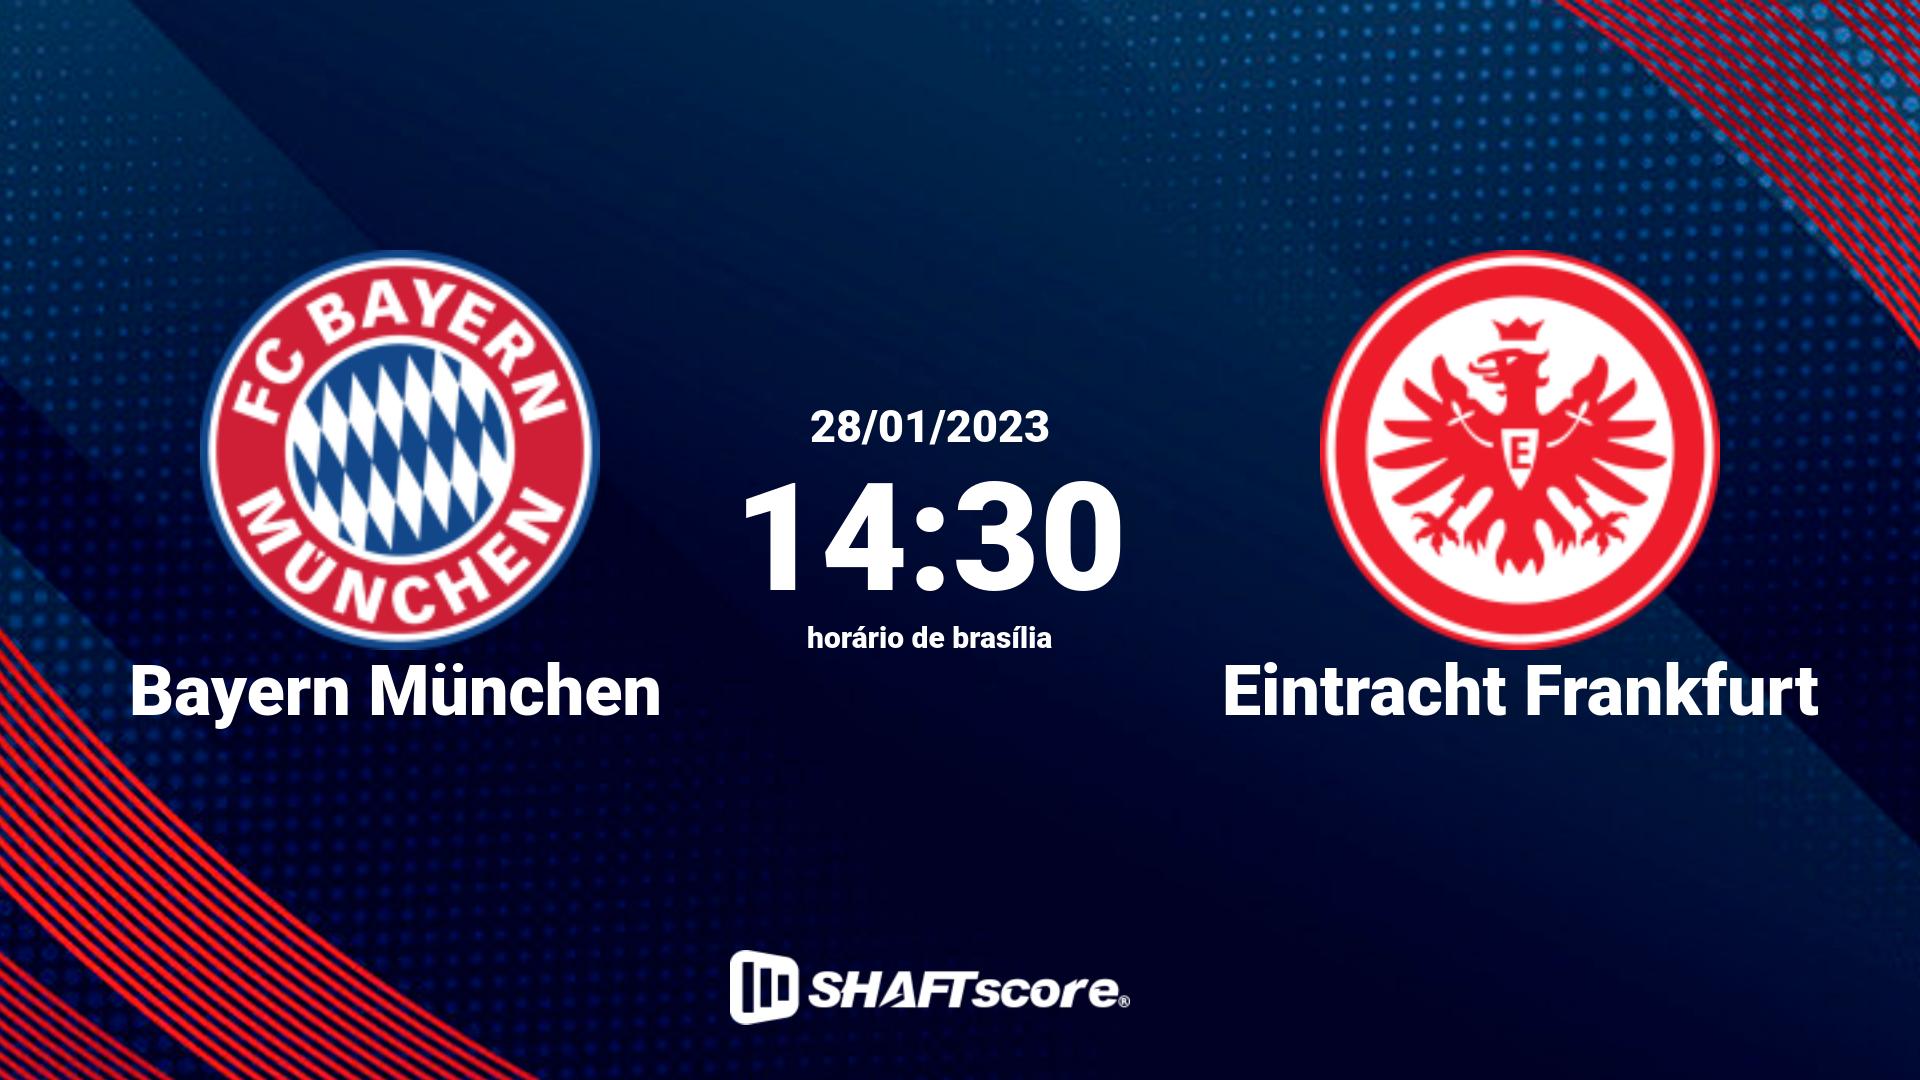 Estatísticas do jogo Bayern München vs Eintracht Frankfurt 28.01 14:30